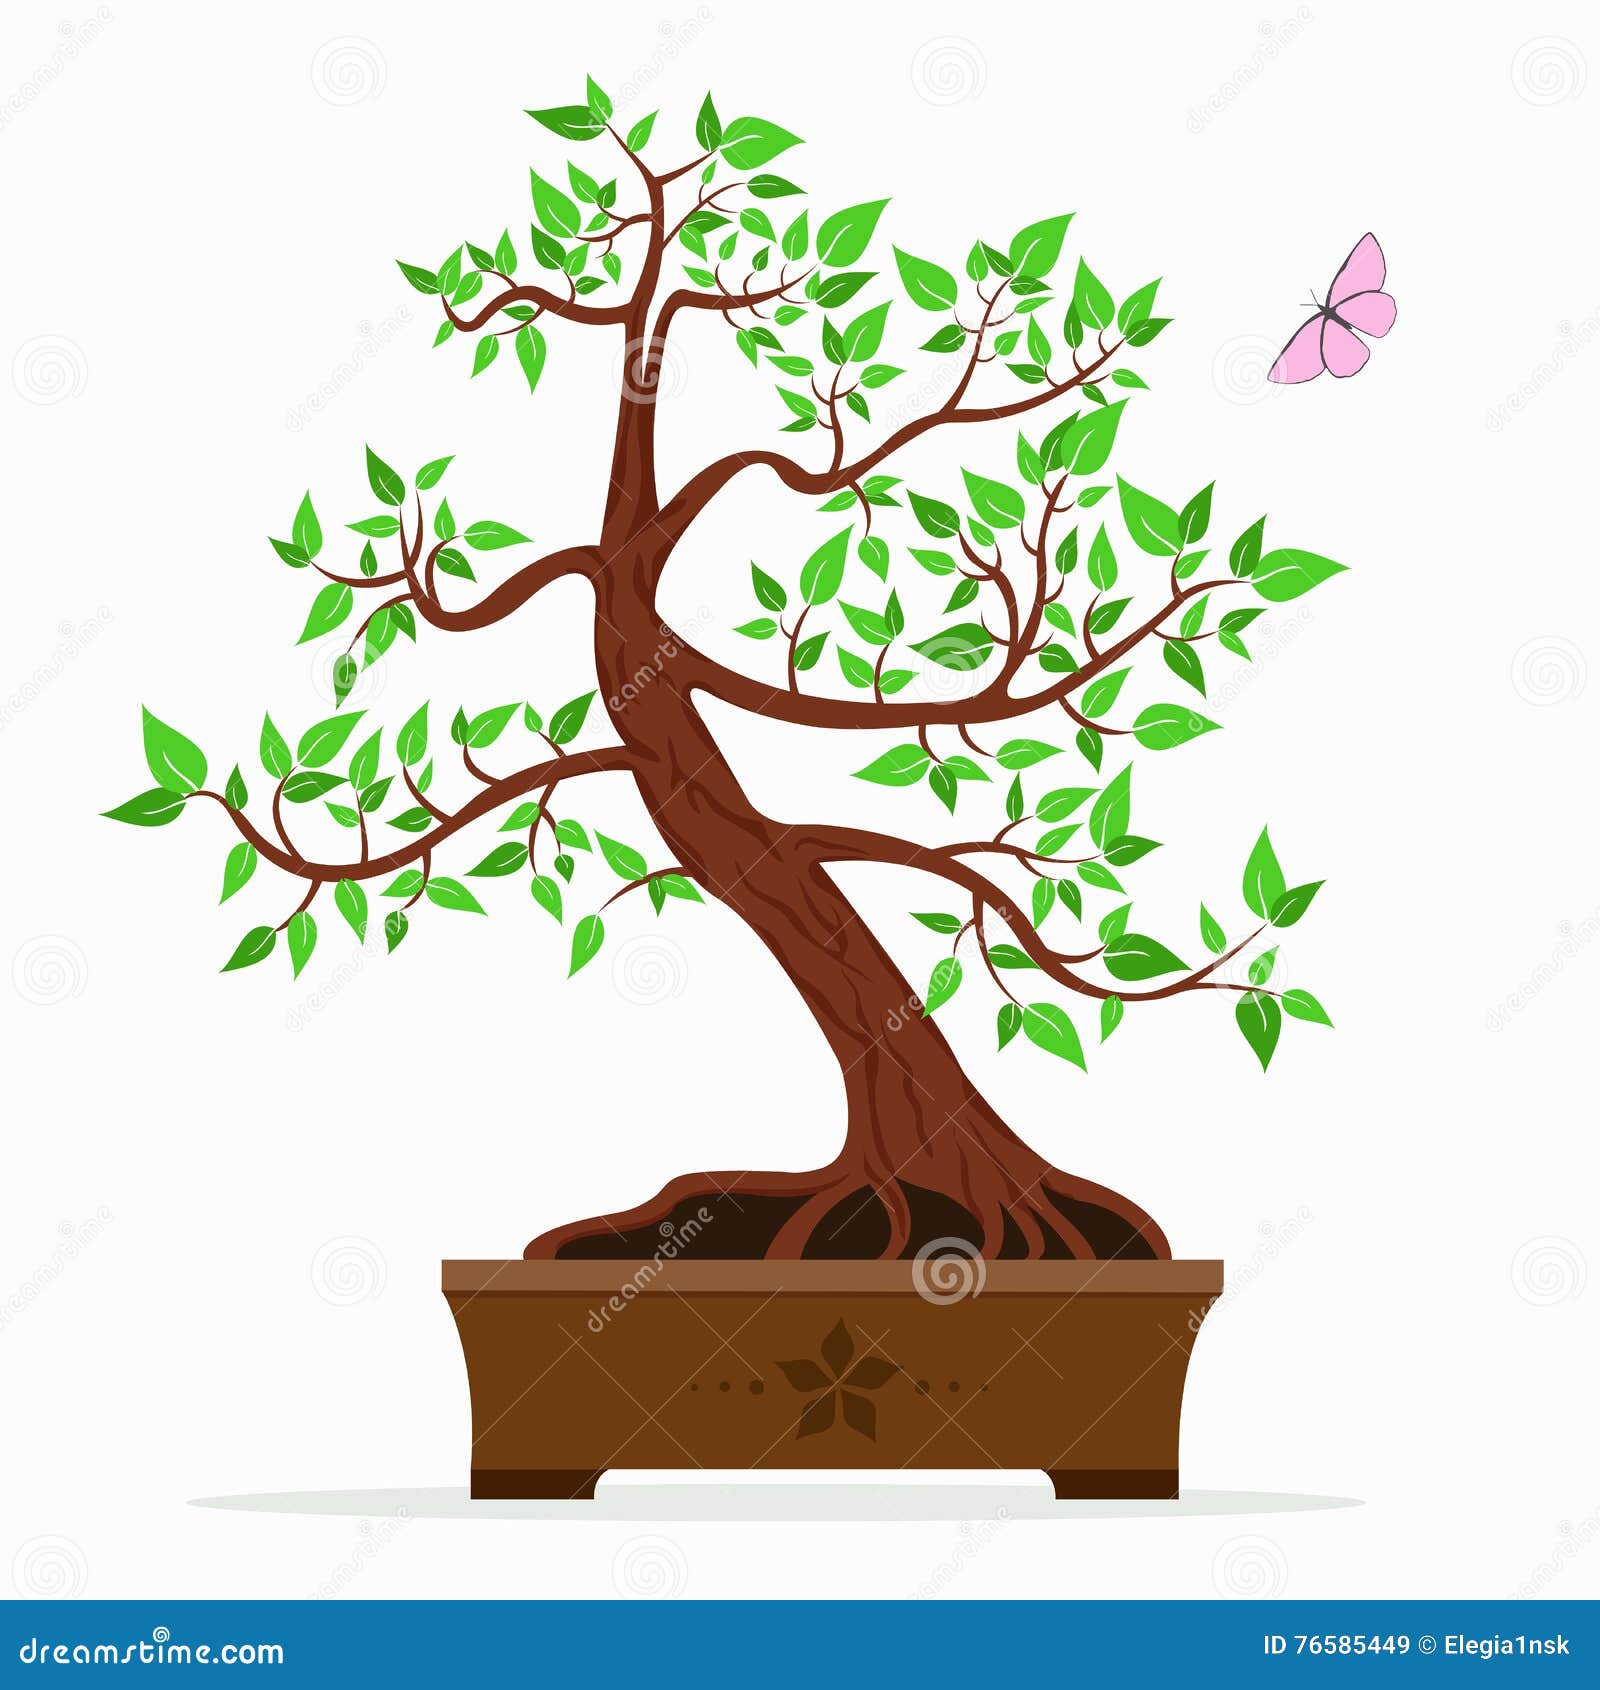 Illustration Of A Bonsai Tree Stock Vector - Illustration of brown